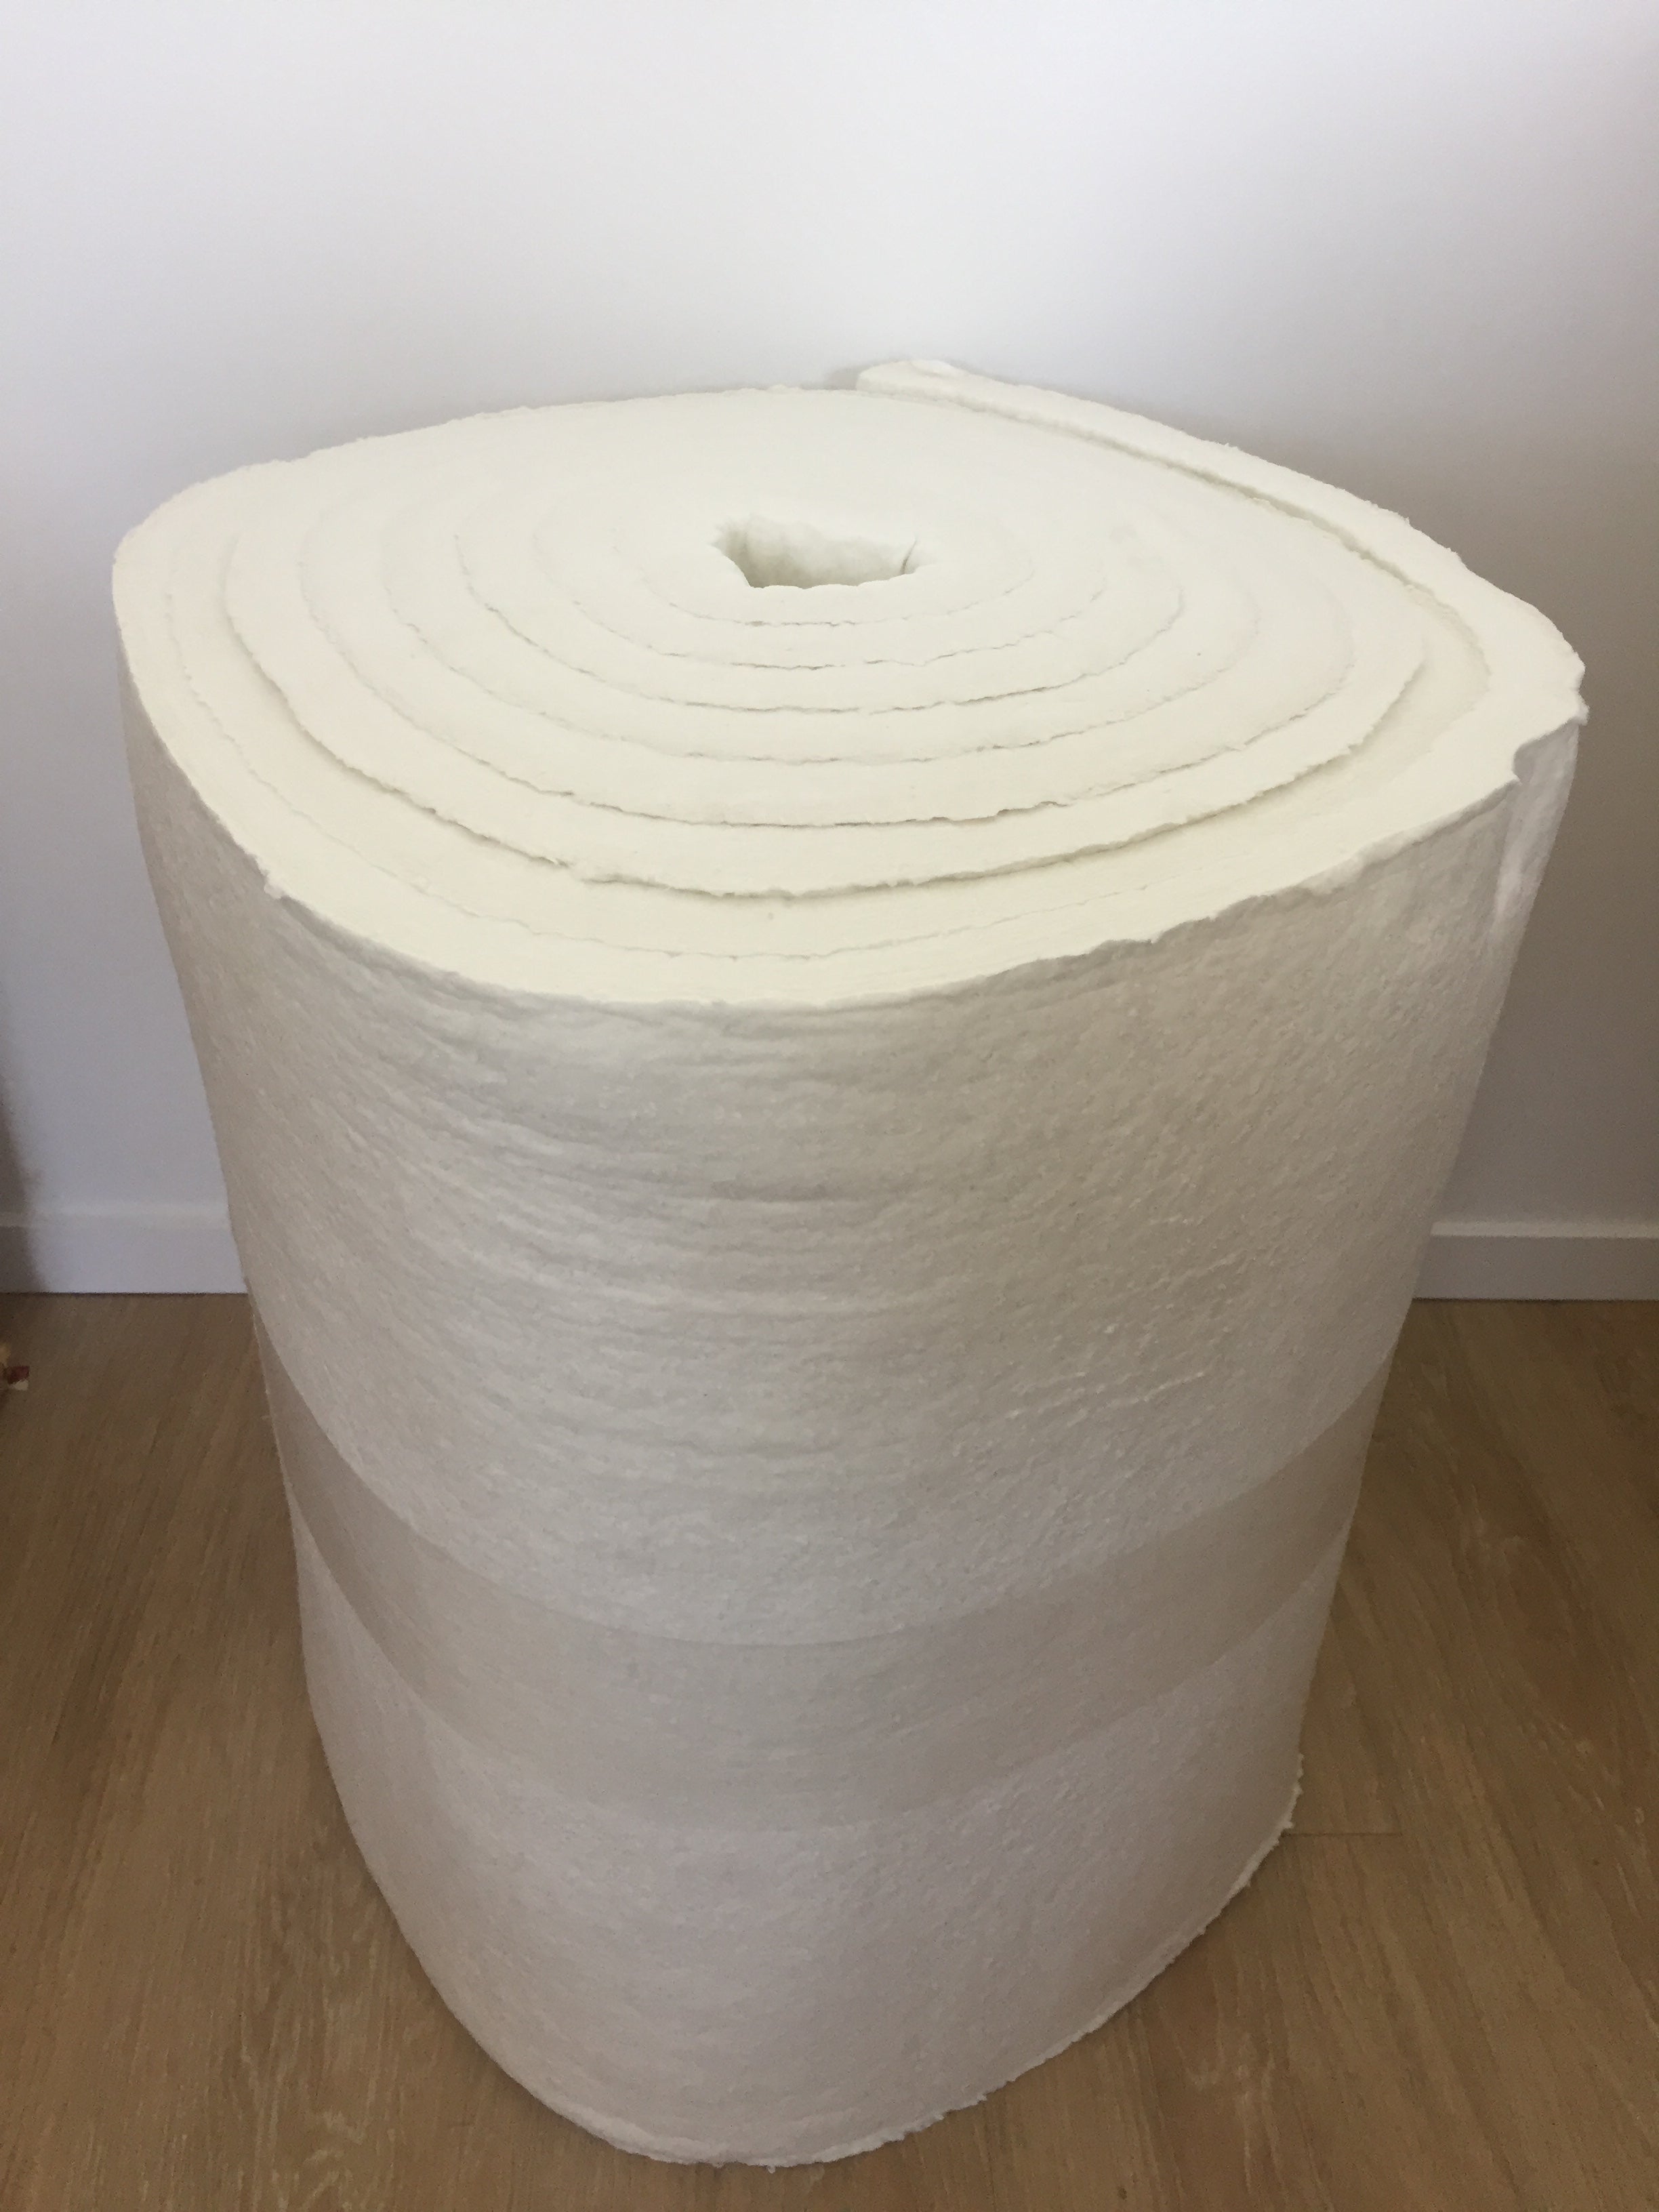 96kg/M3 128kg/M3 Bio Soluble Ceramic Fibre Blanket